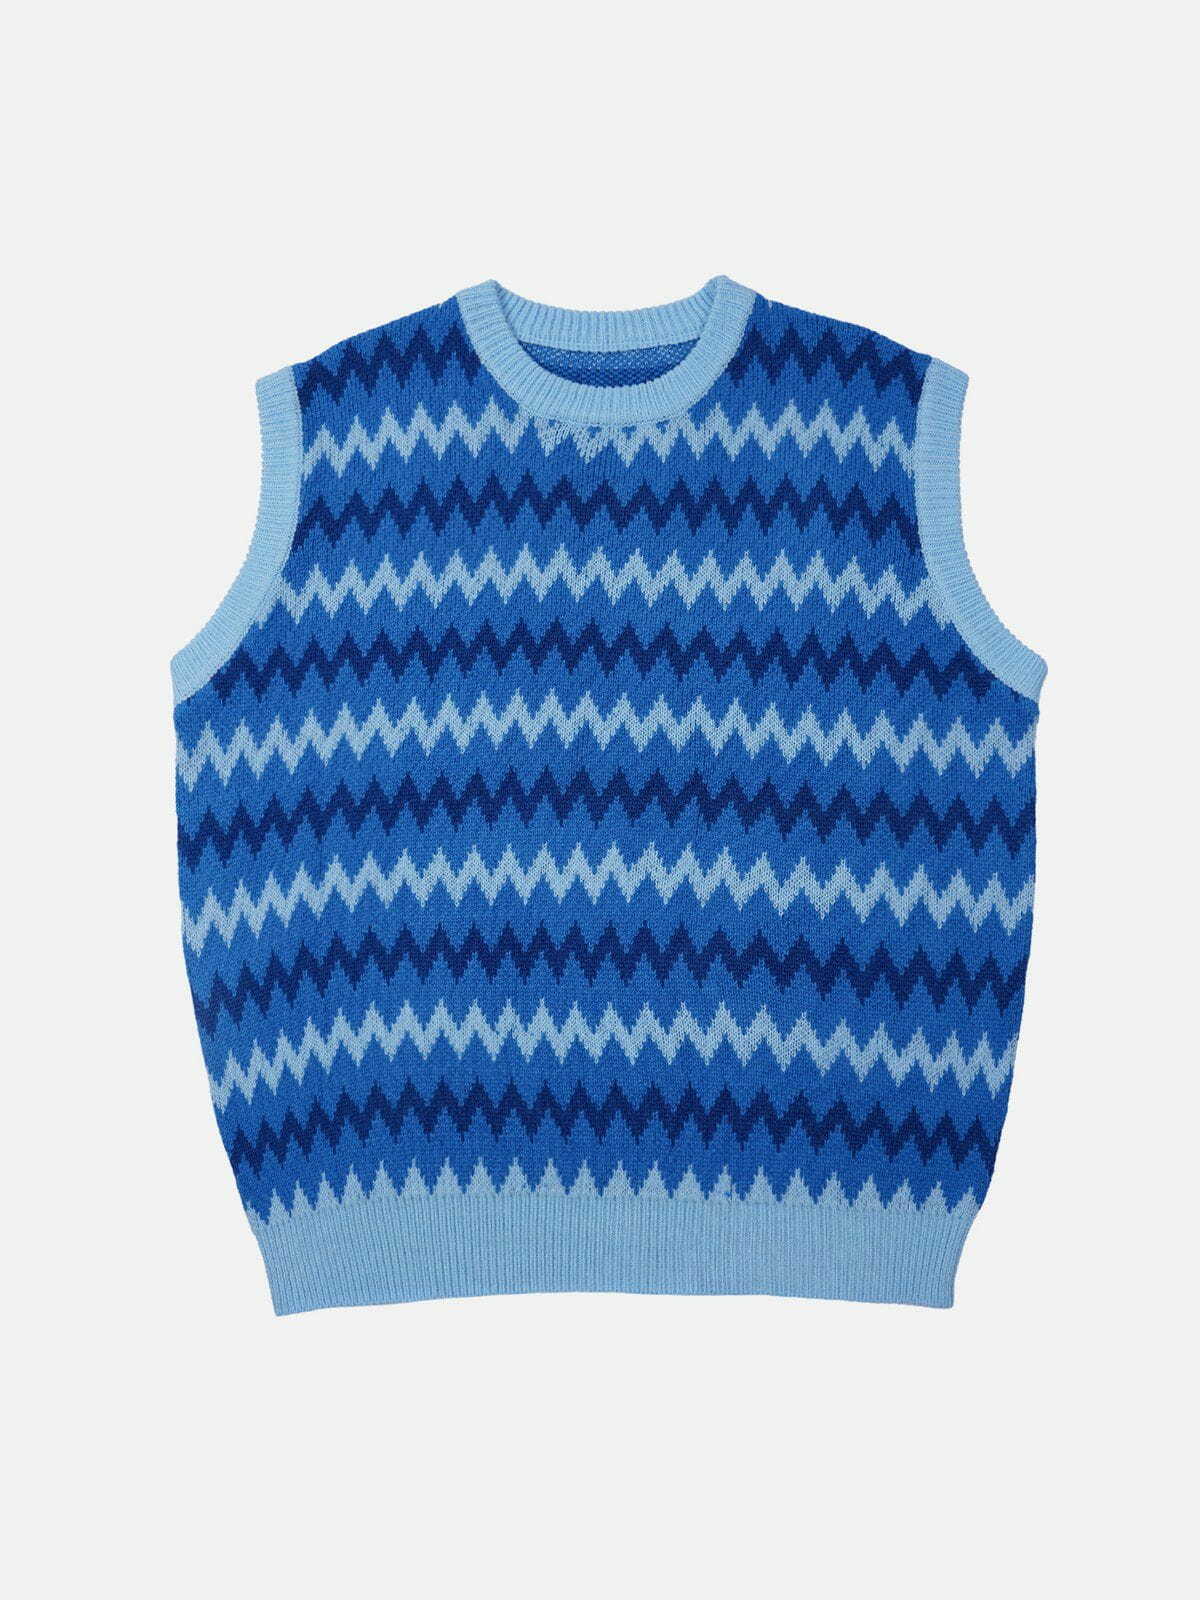 retro stripes sweater vest edgy  vibrant y2k sleeveless top 6088